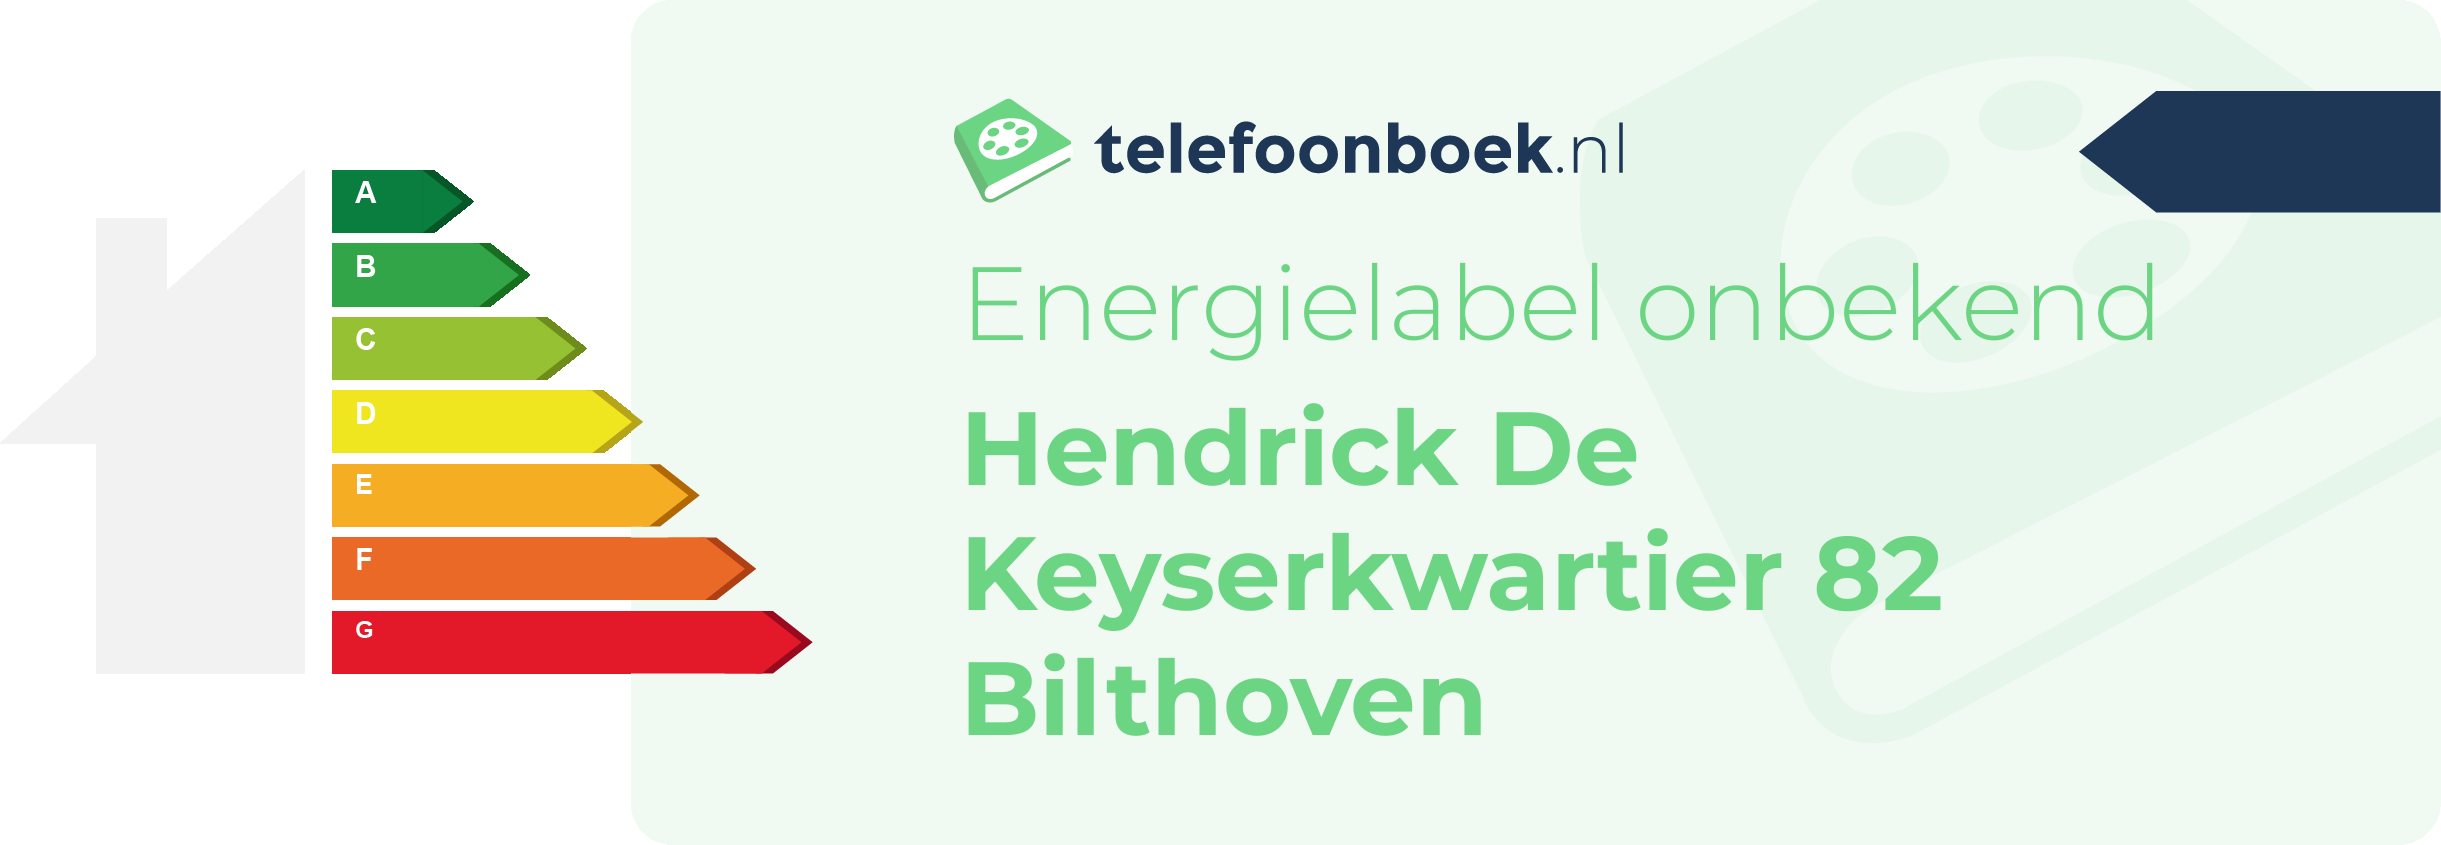 Energielabel Hendrick De Keyserkwartier 82 Bilthoven